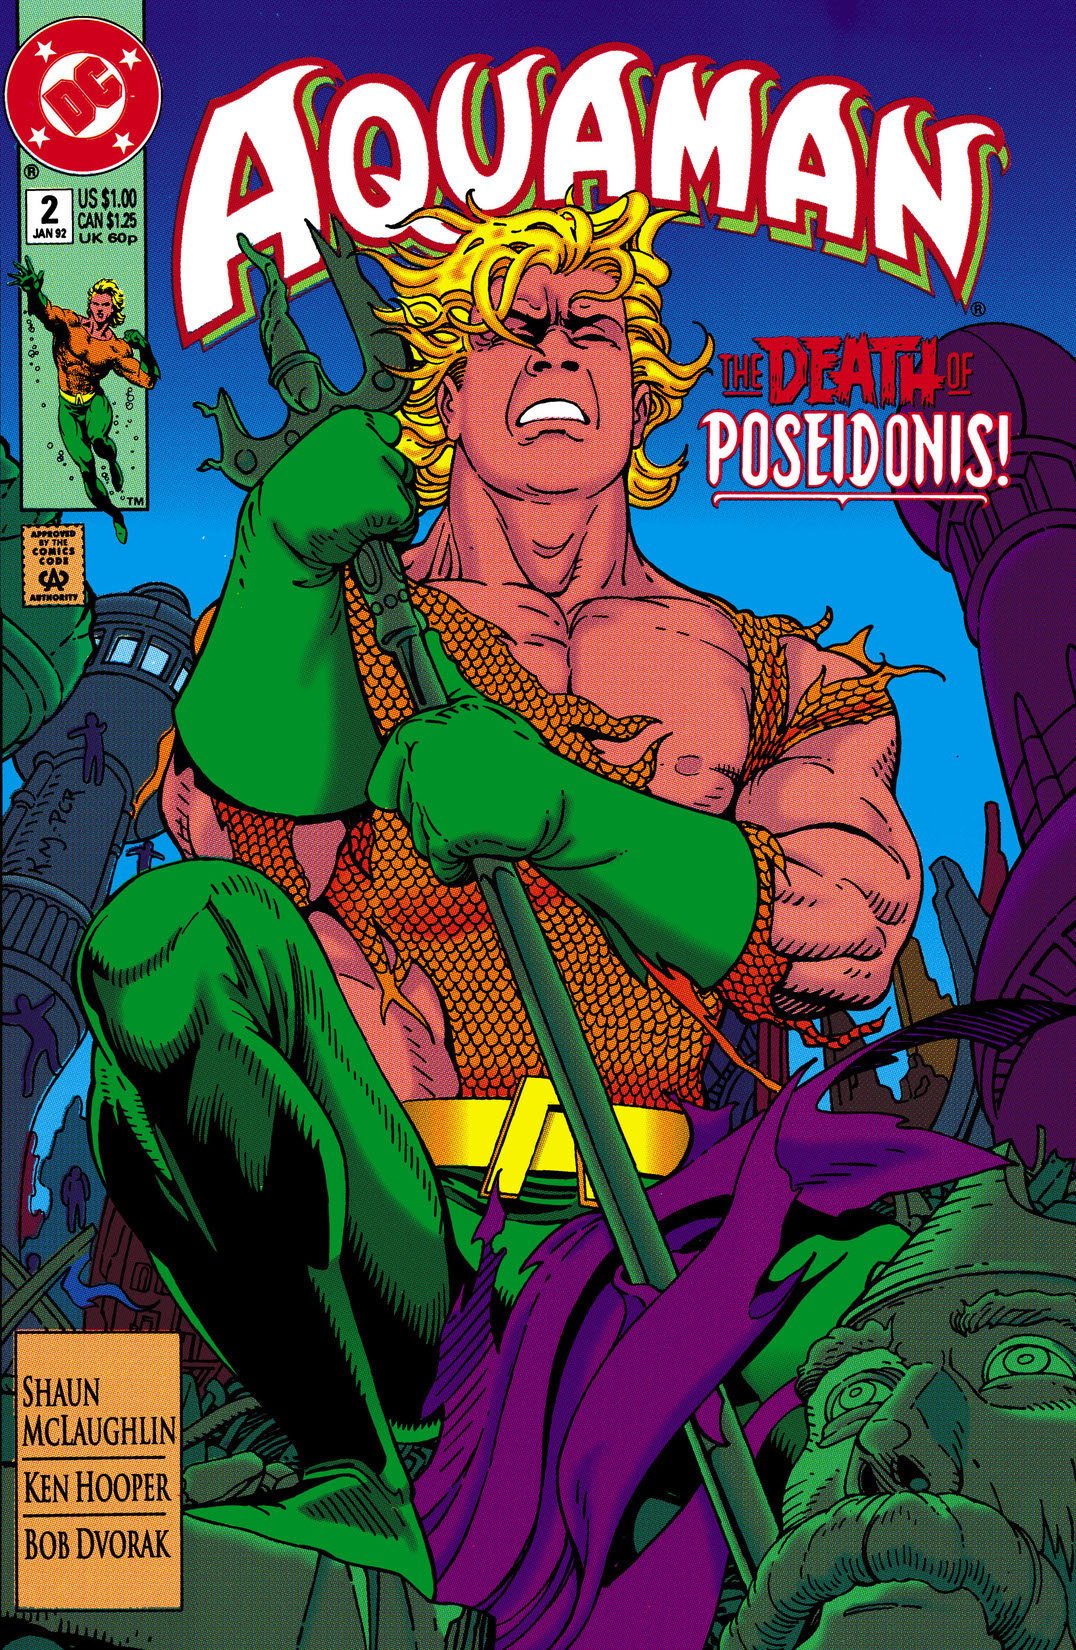 Aquaman ('91 series) (1991-) #2 preview images